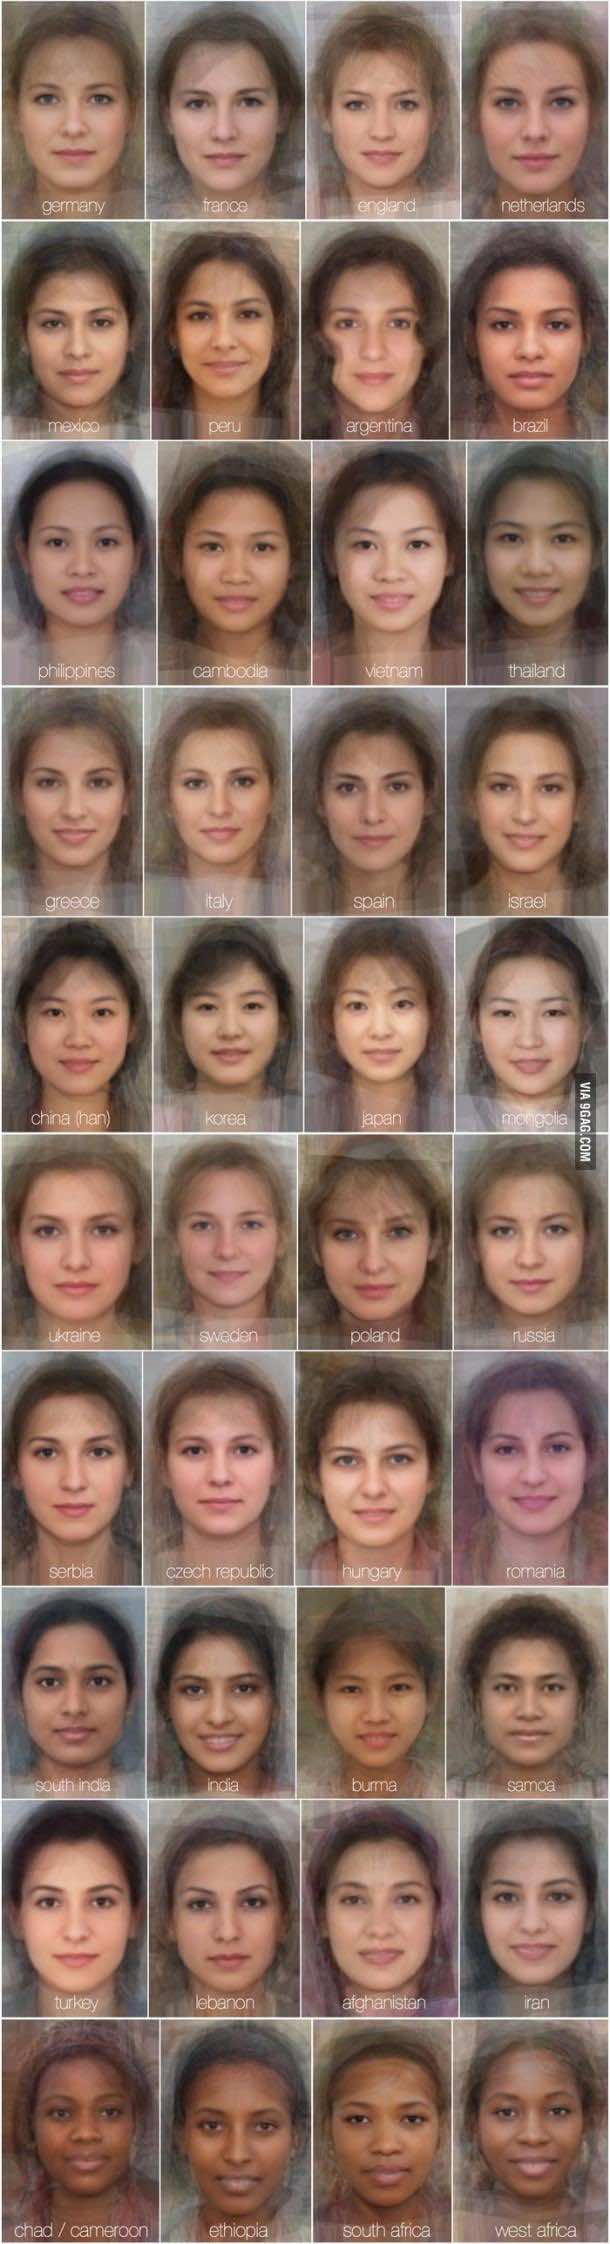 average women faces